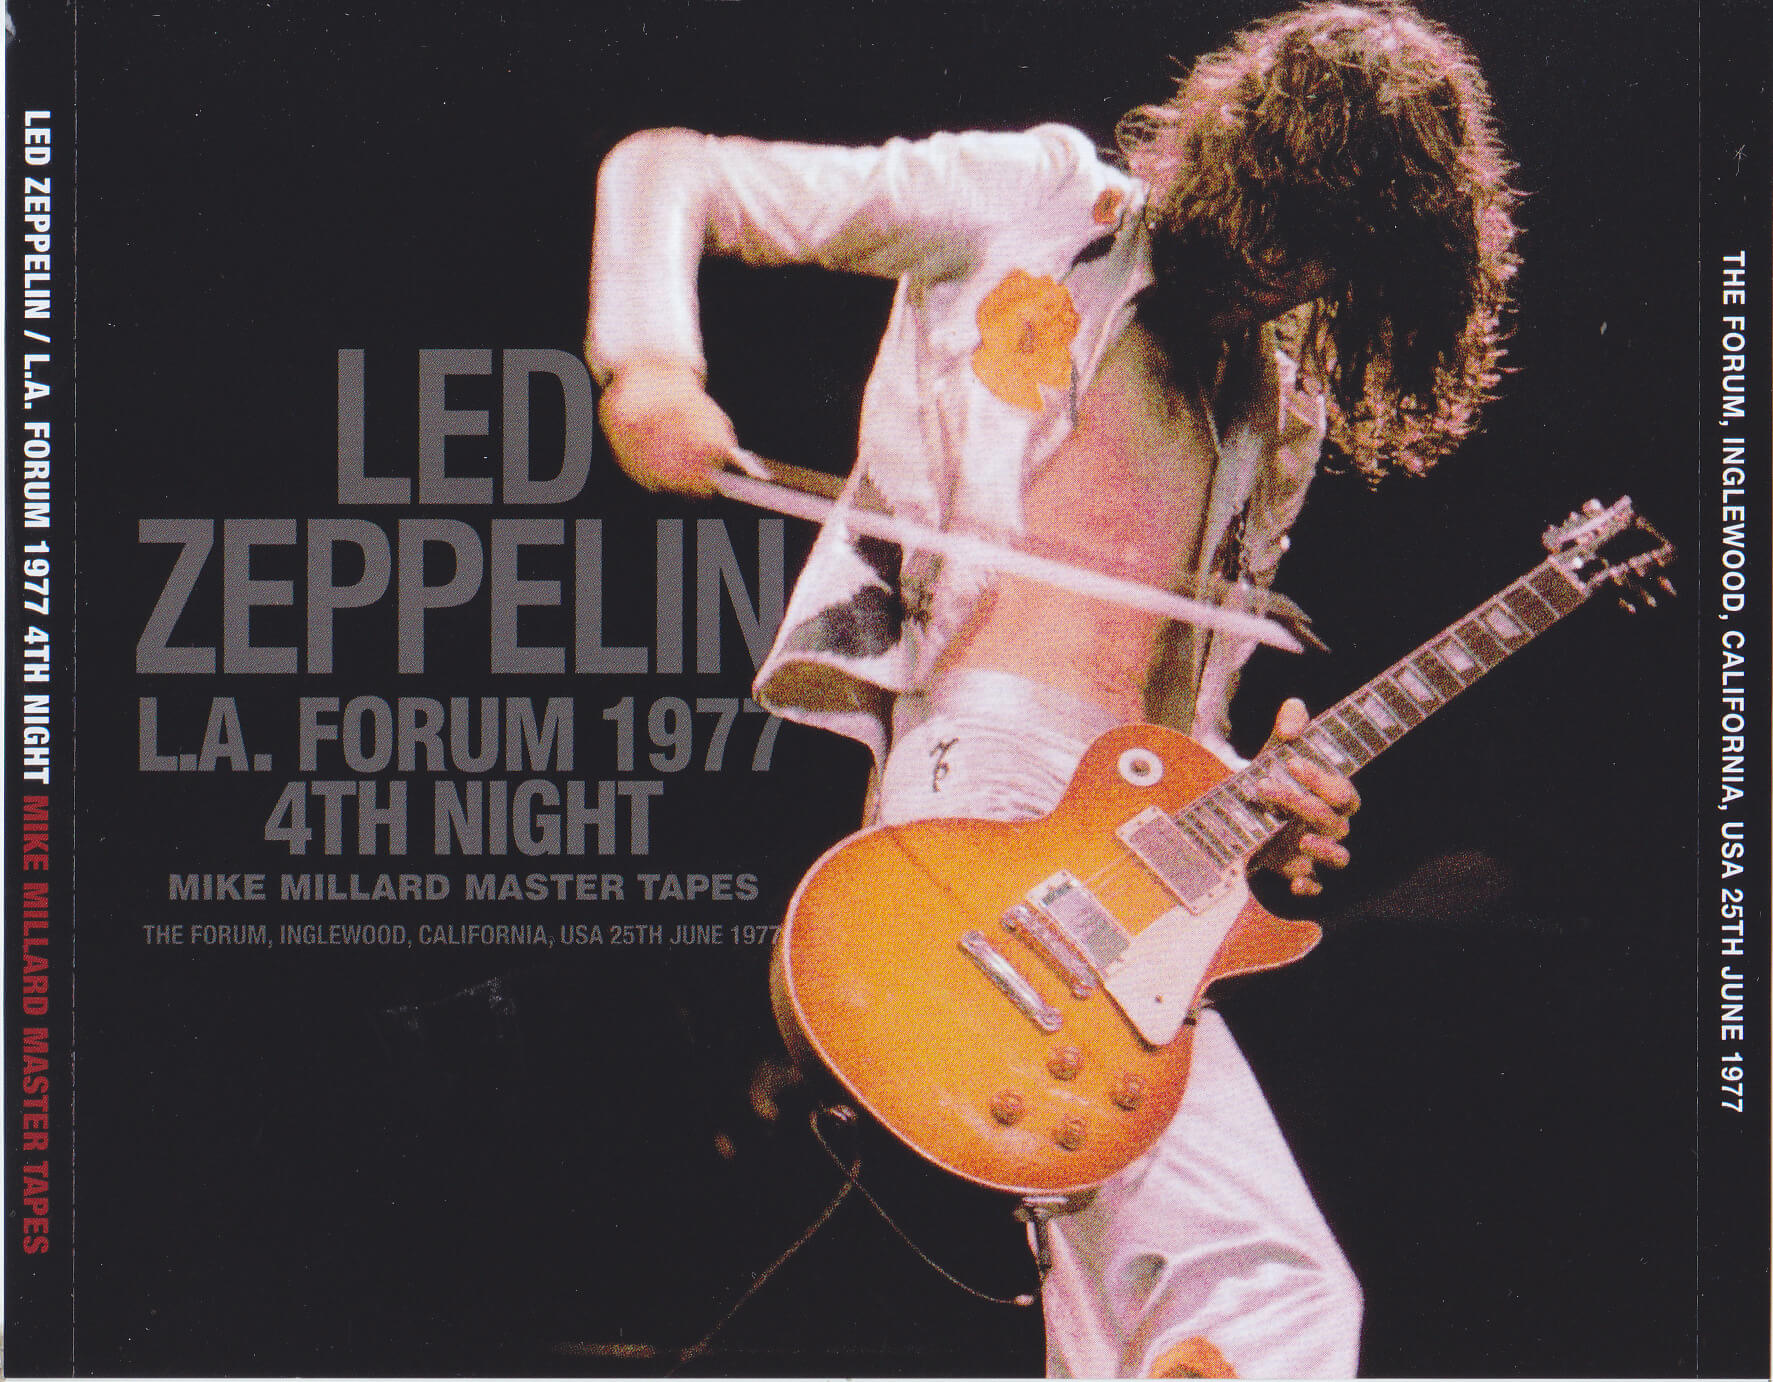 Led Zeppelin / LA Forum 1977 4th Night Mike Millard Master Tapes 